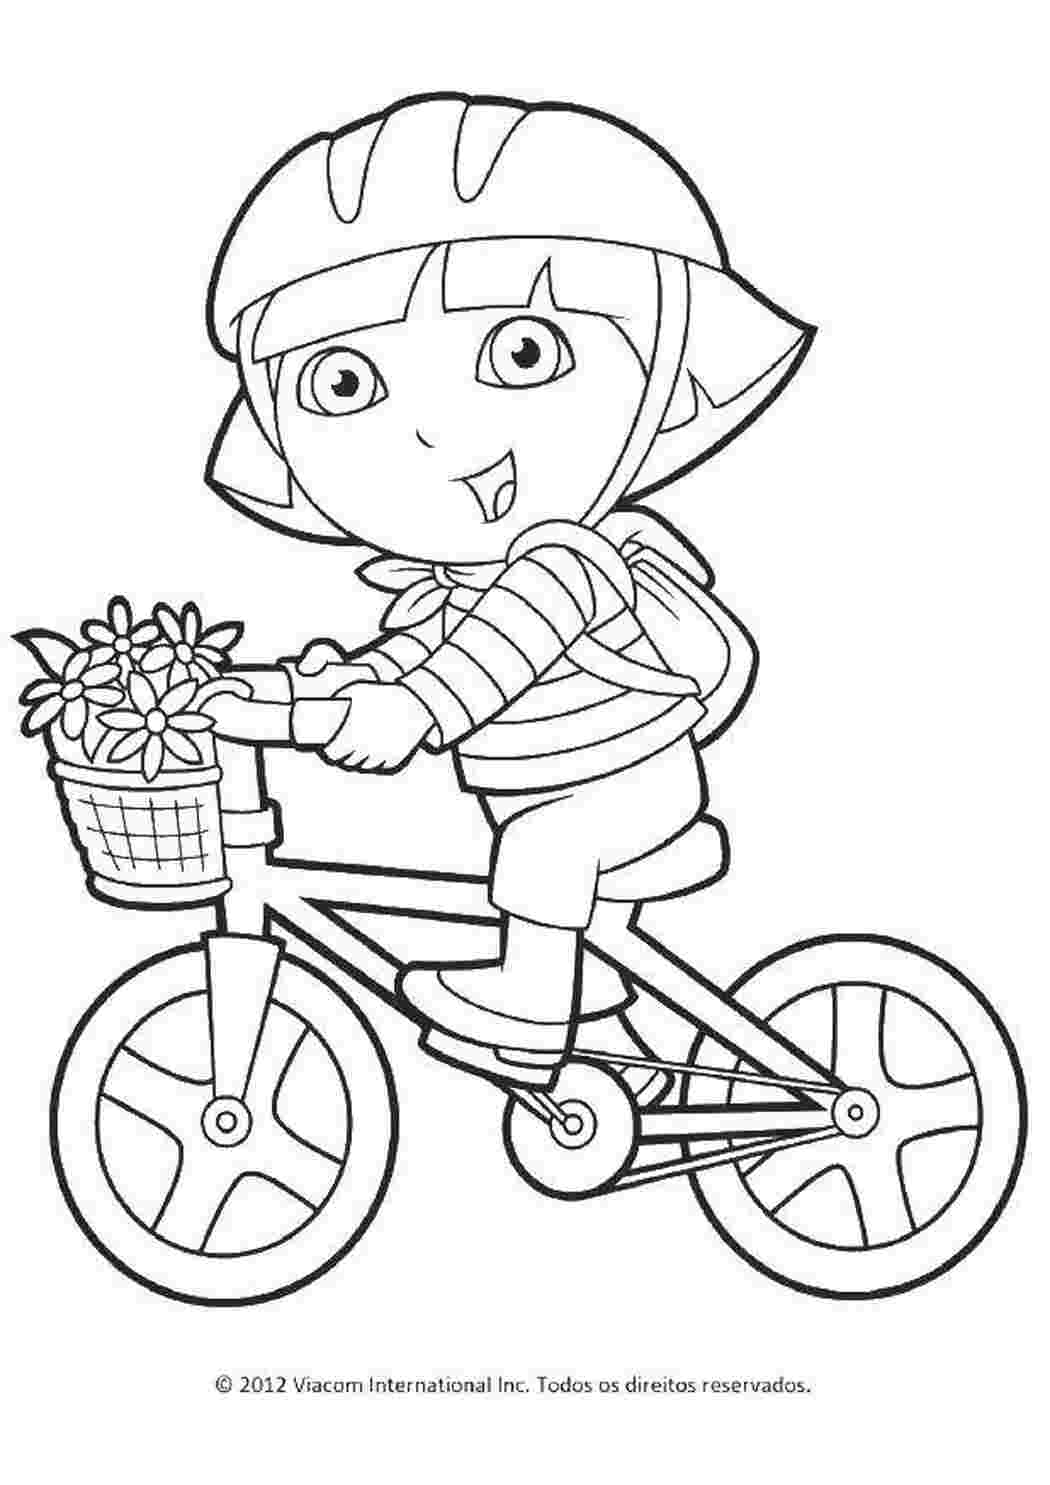 Раскраски Даша на велосипеде мультик даша и башмачек, велосипед. даша едет на велосипеде